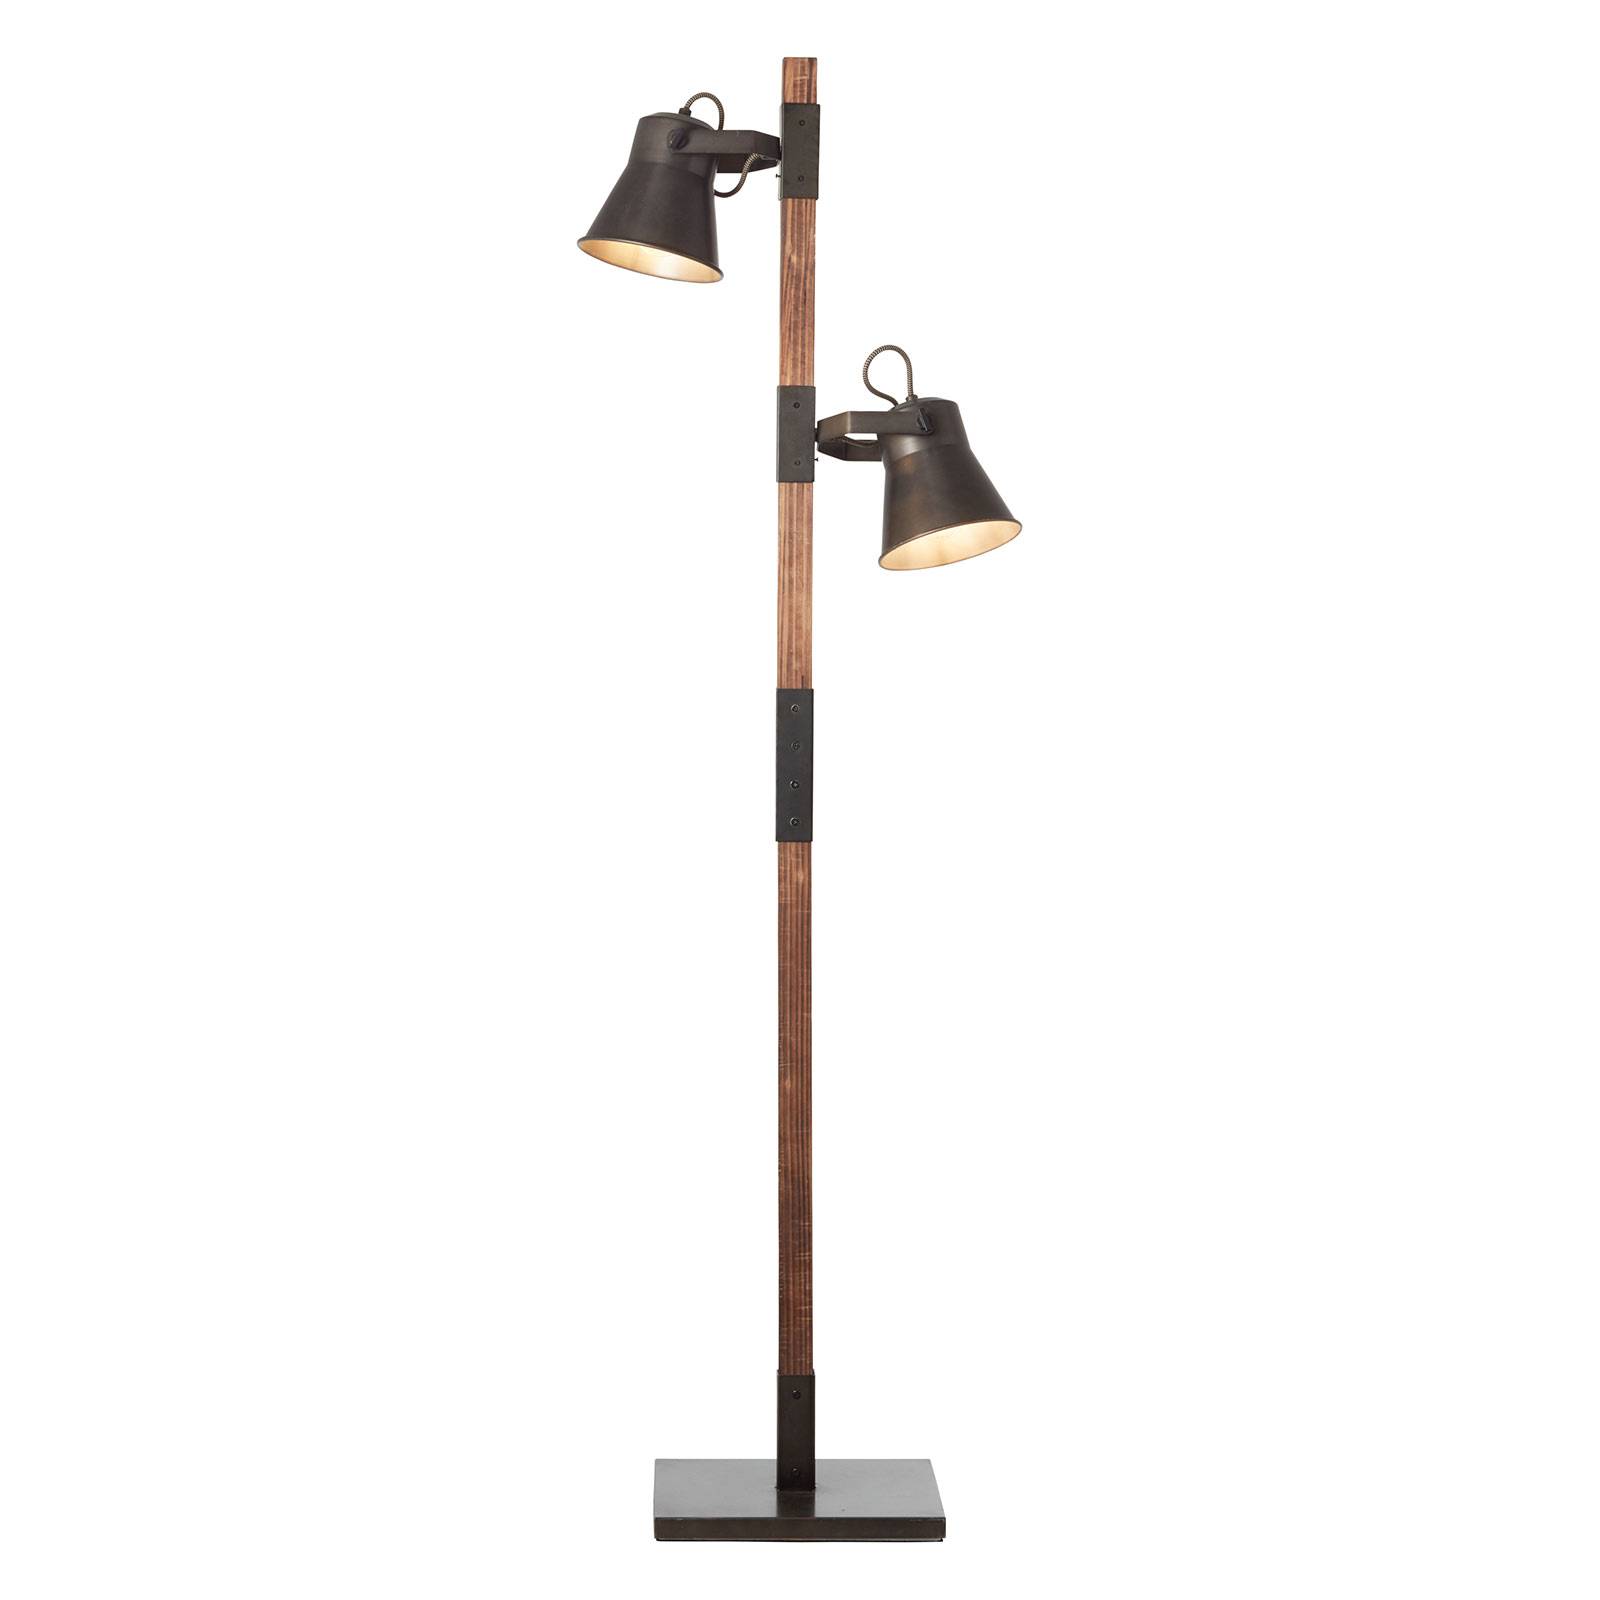 Plow floor lamp with 2 spots, black/dark wood